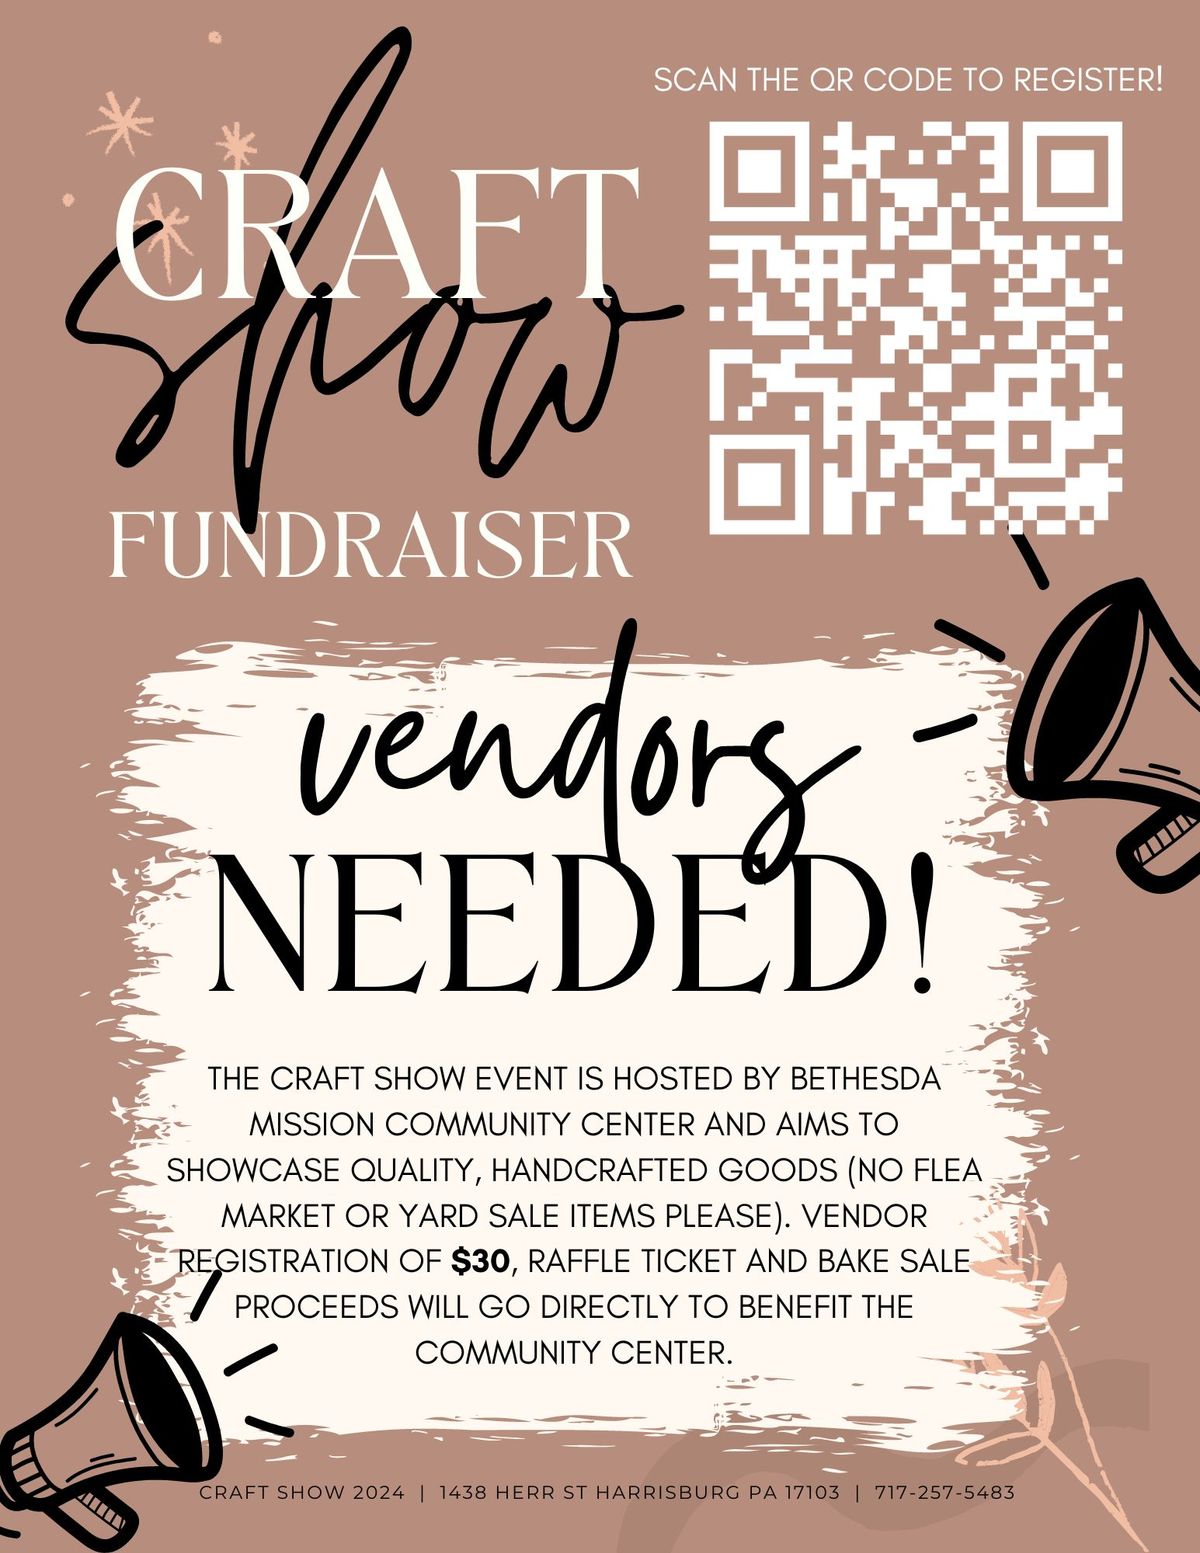 Craft Show Fundraiser